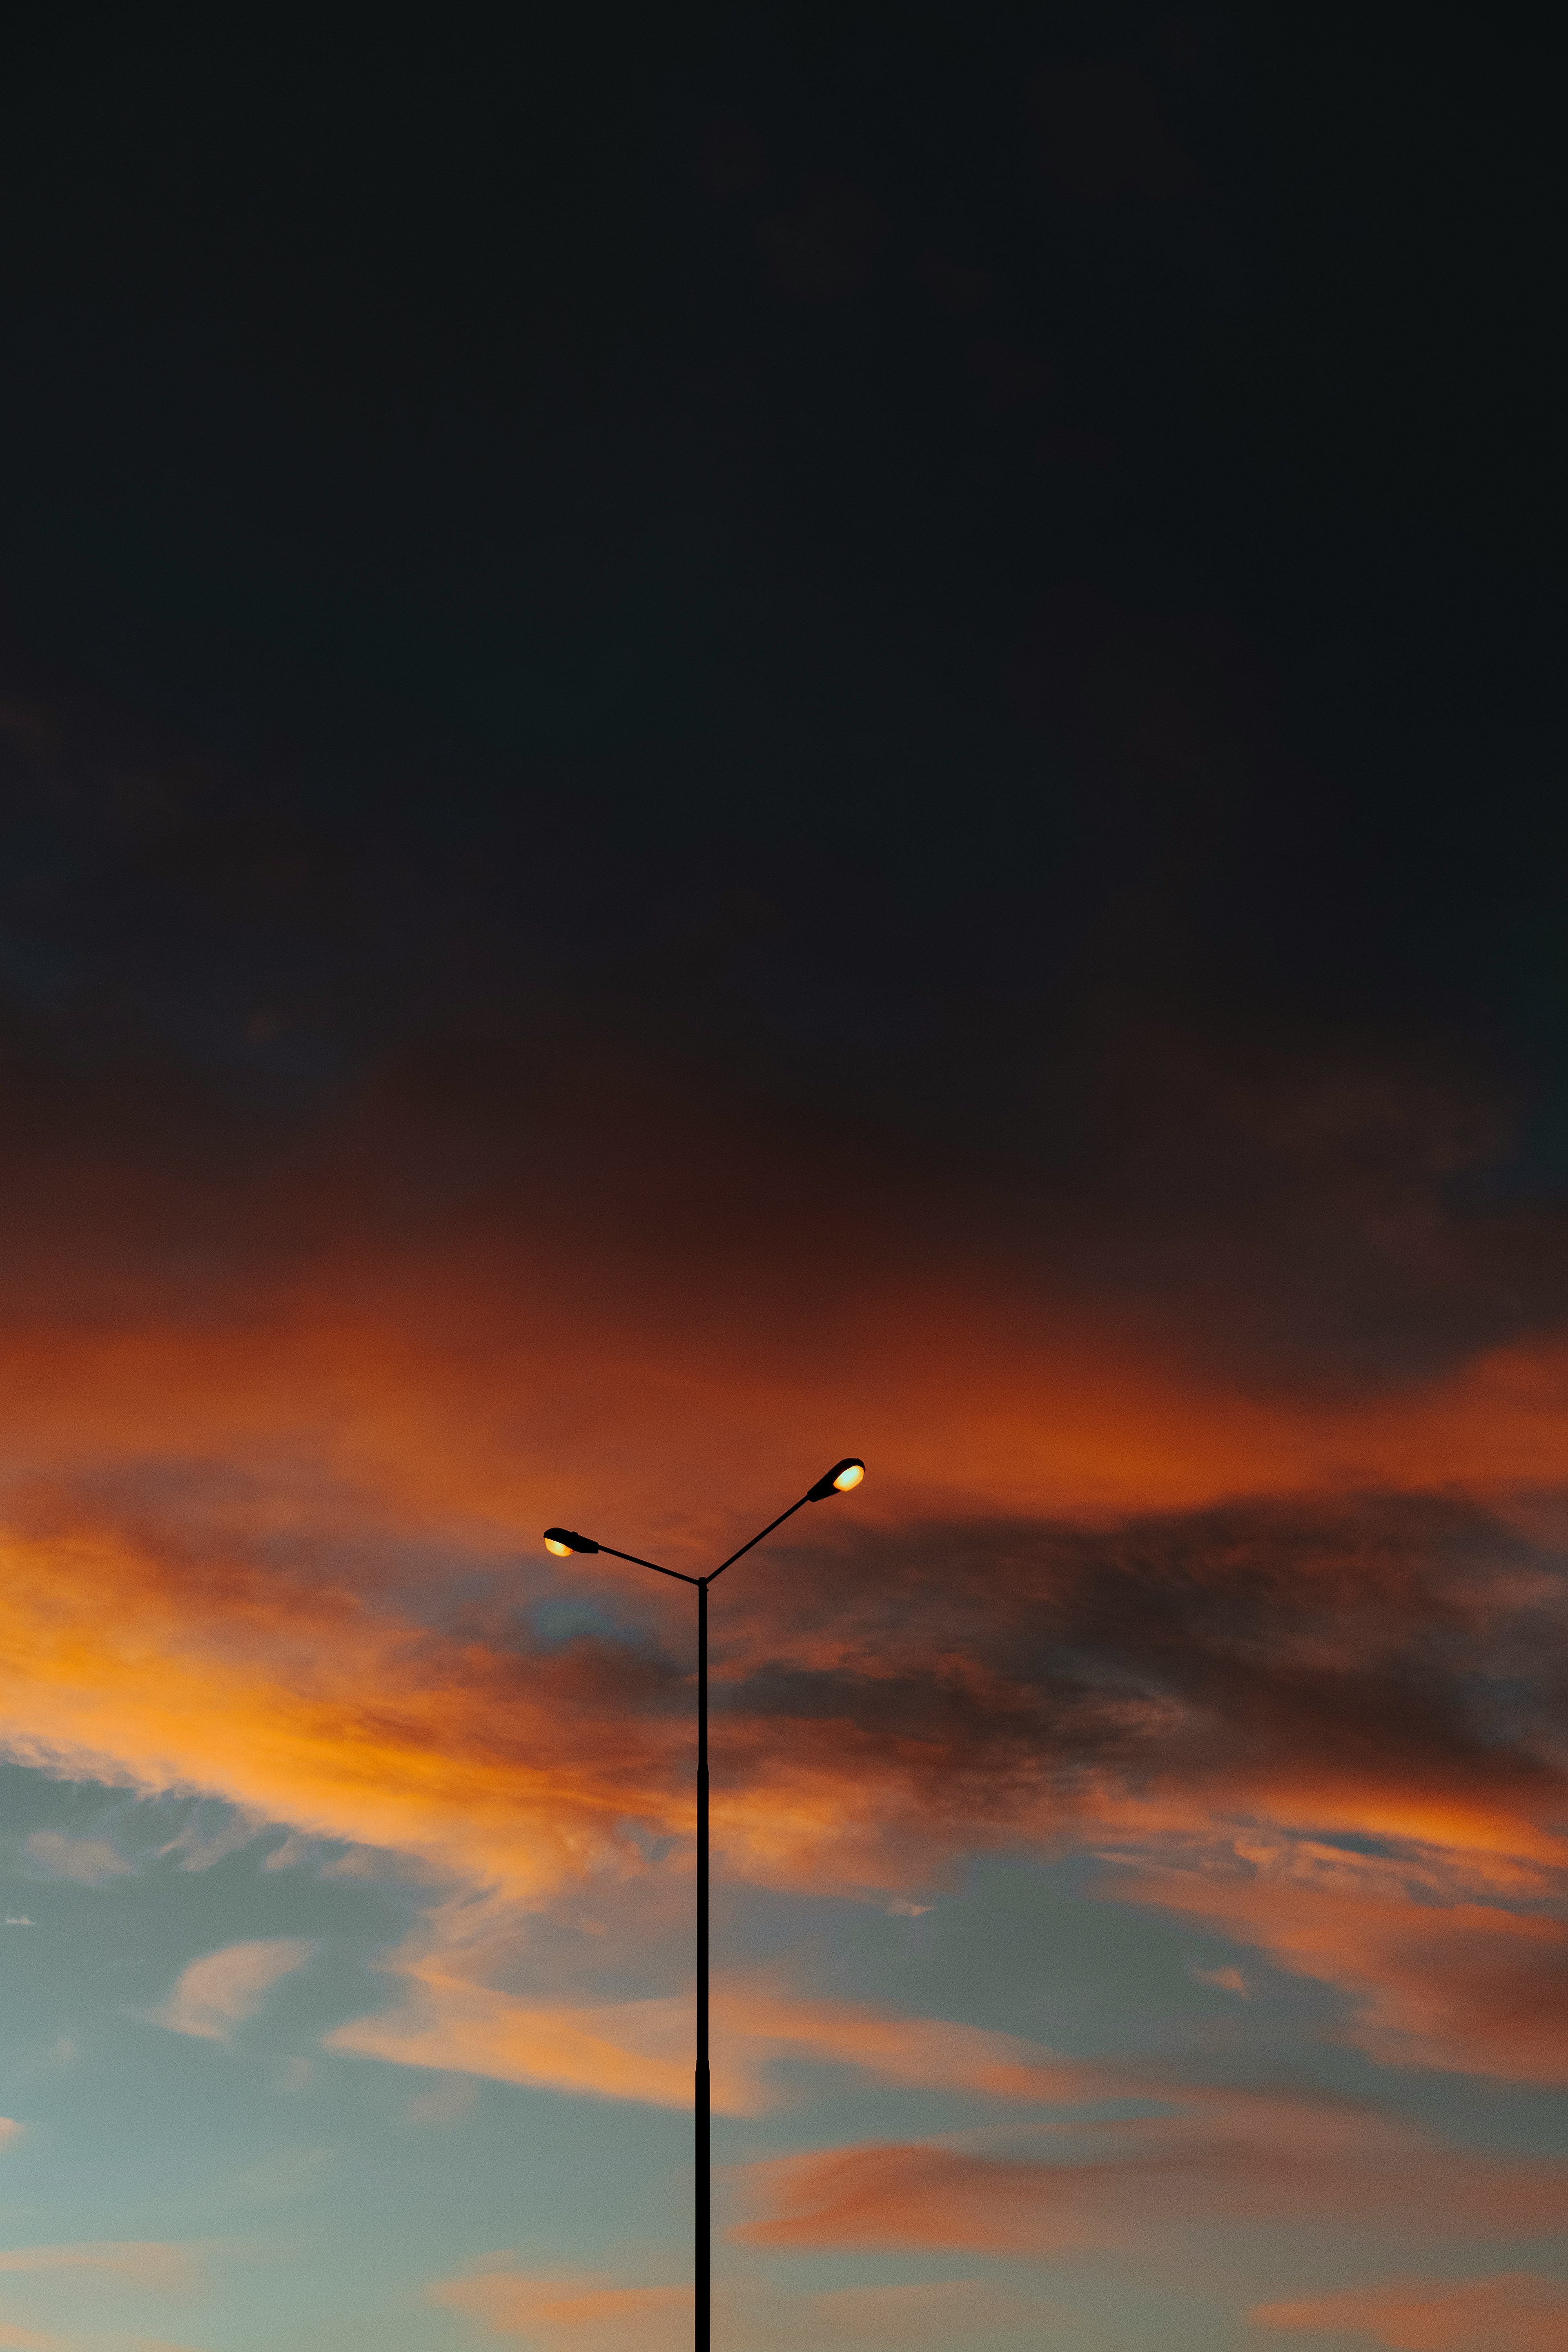 black street light under orange and blue sky